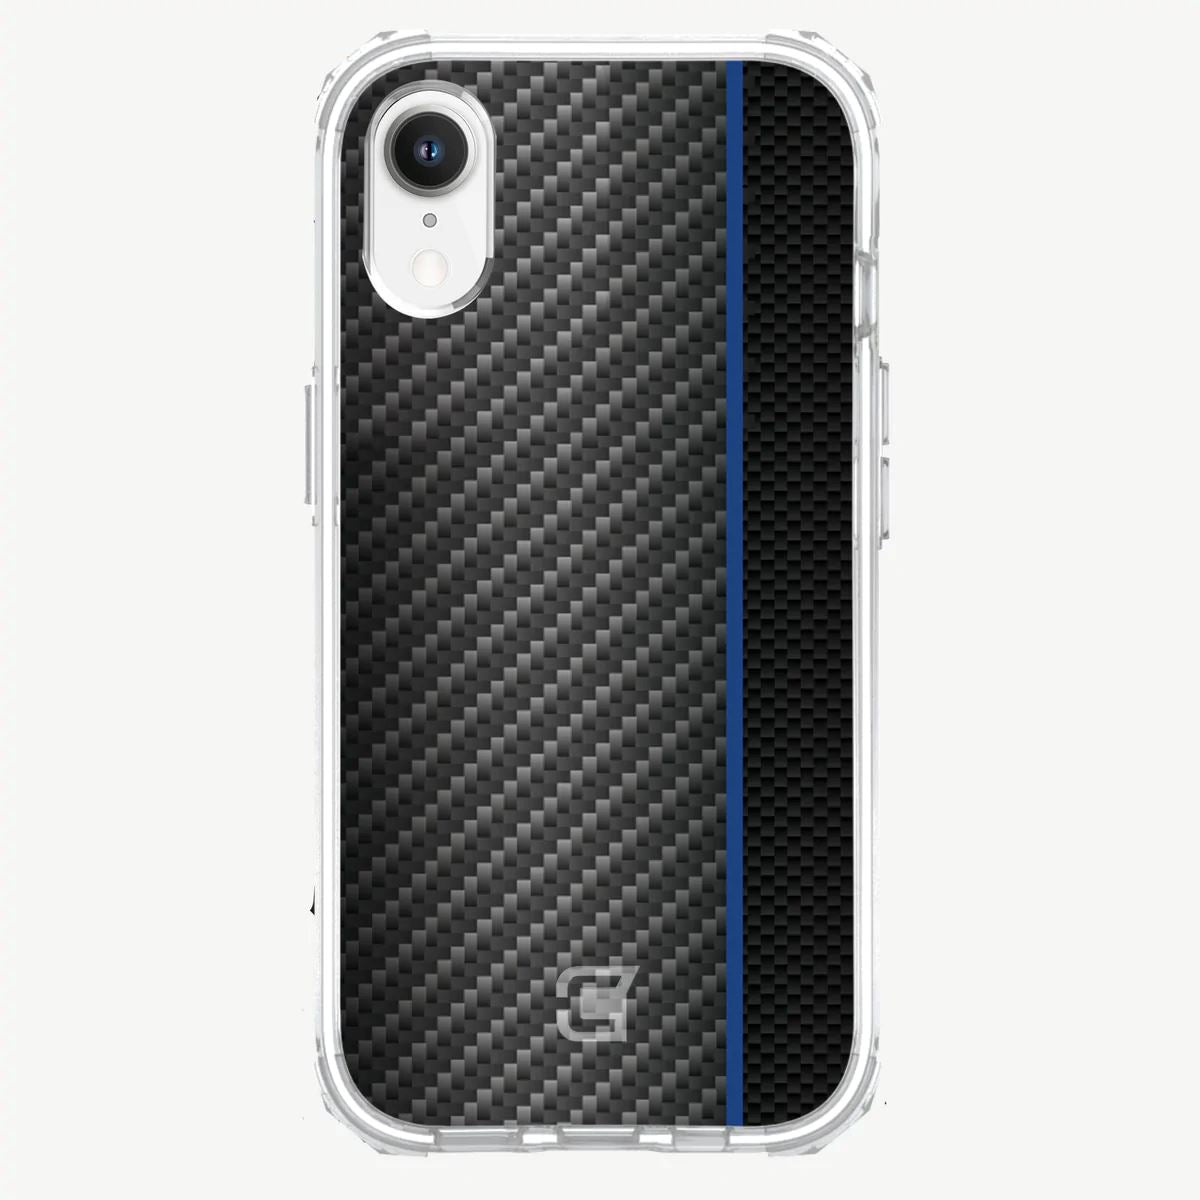 iPhone SE Case - Carbon Fiber with Blue Line Design